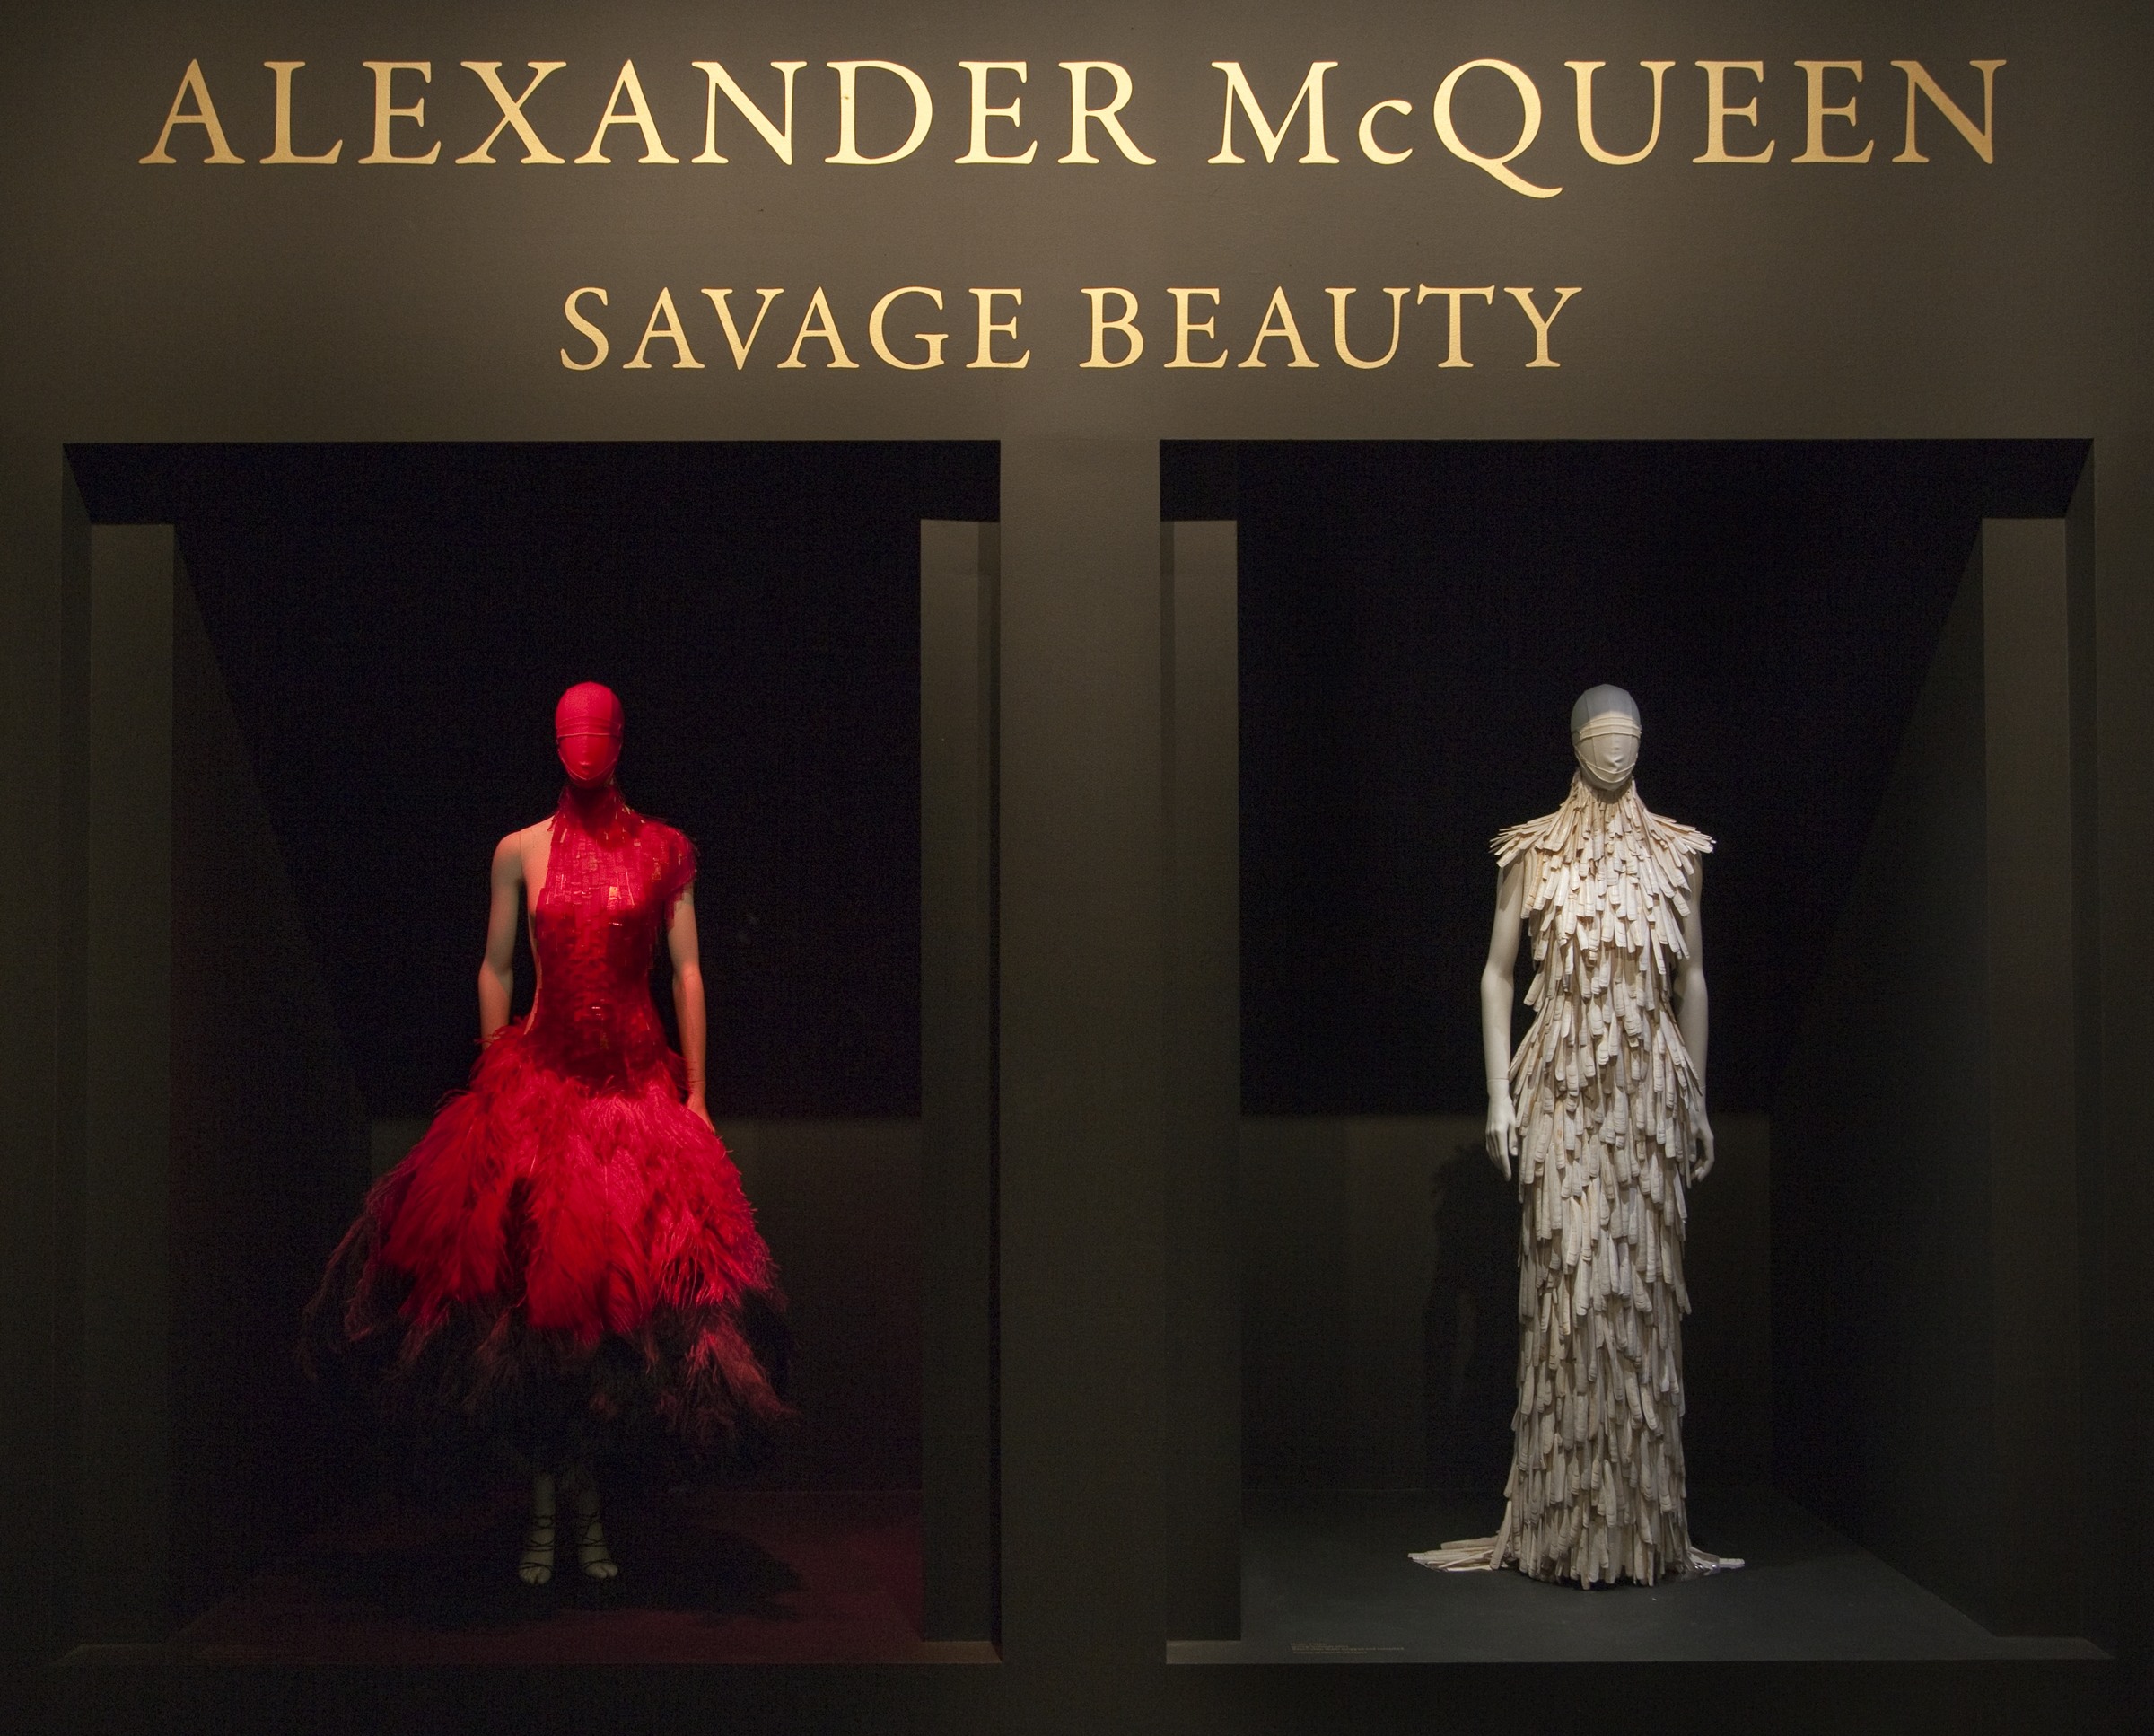 Alexander McQueen's Sartorial Savagery2400 x 1934